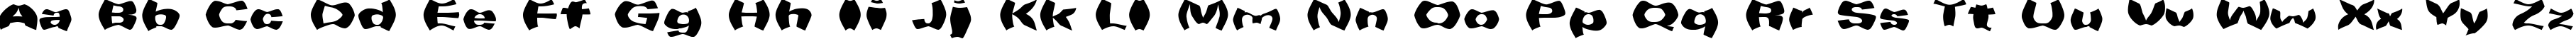 Пример написания английского алфавита шрифтом WarpSpeed